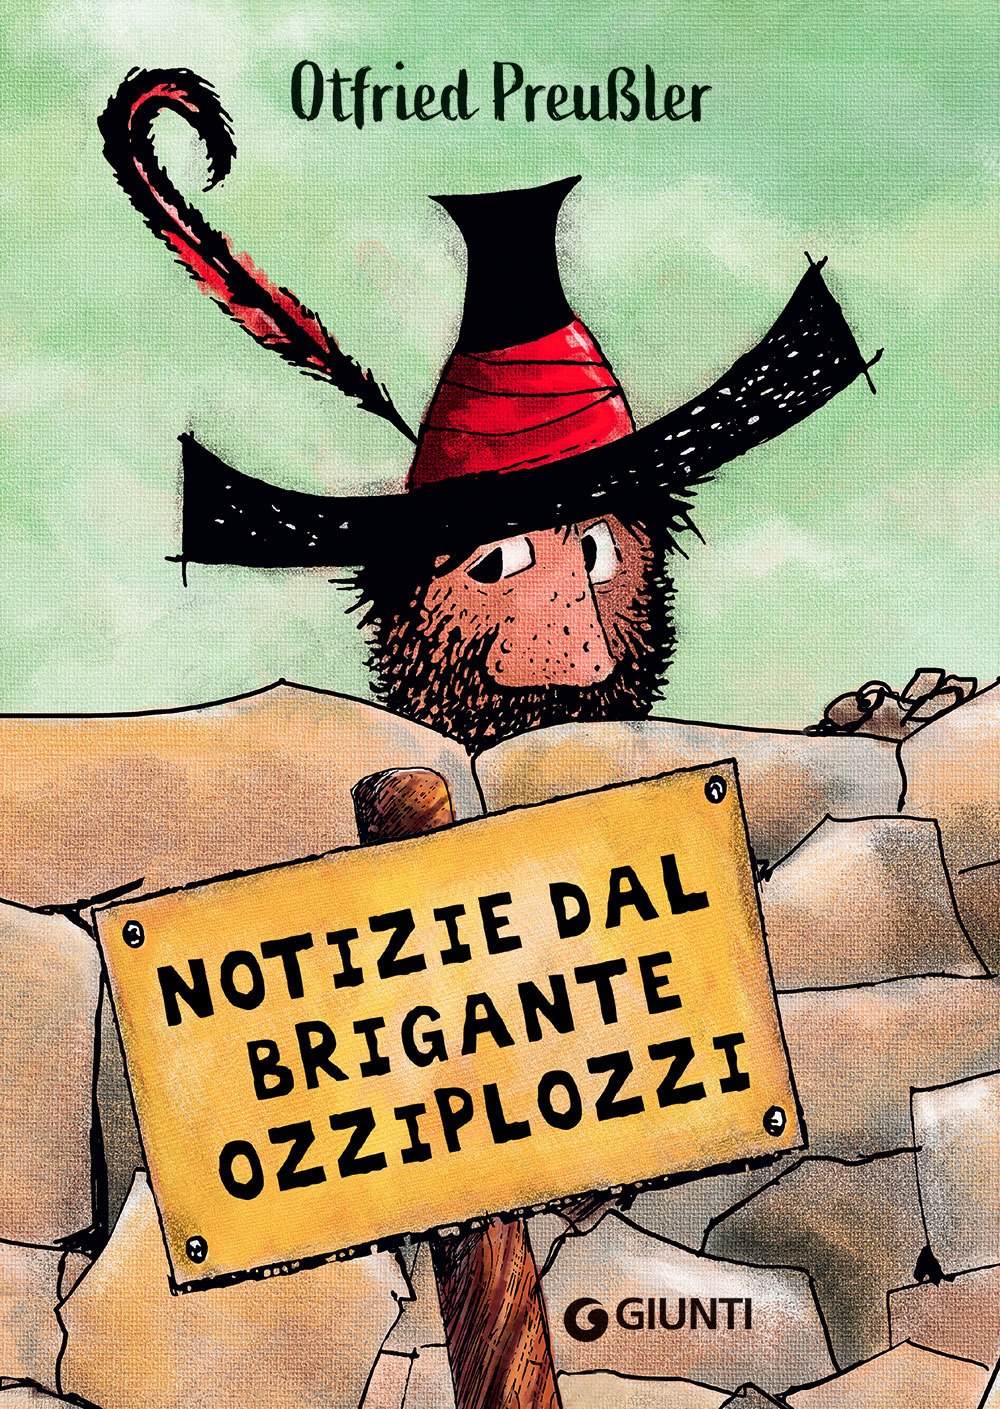 Image of Notizie dal brigante Ozziplozzi